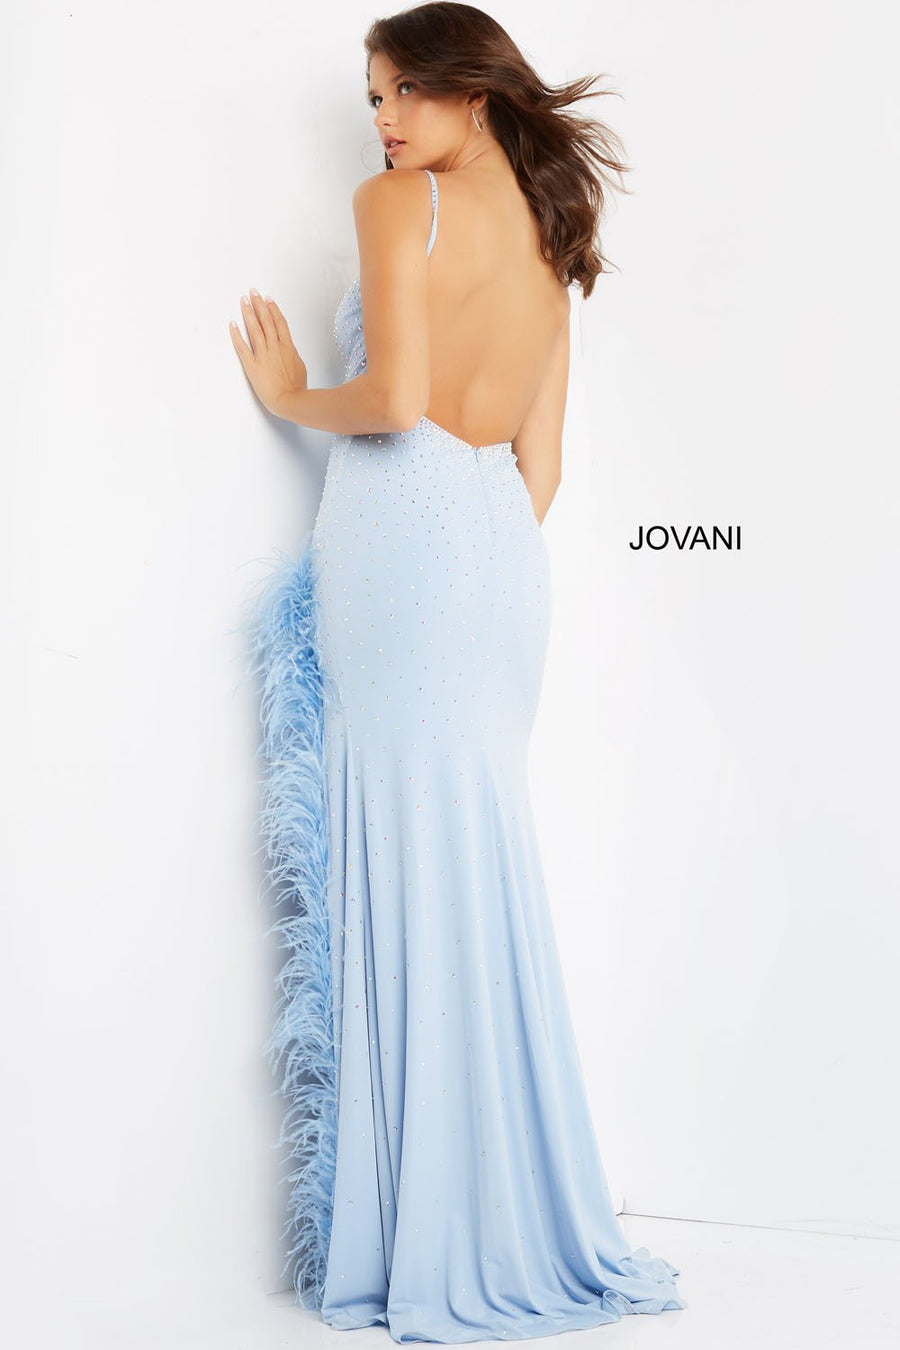 Jovani 08283 Lightblue prom dresses images.